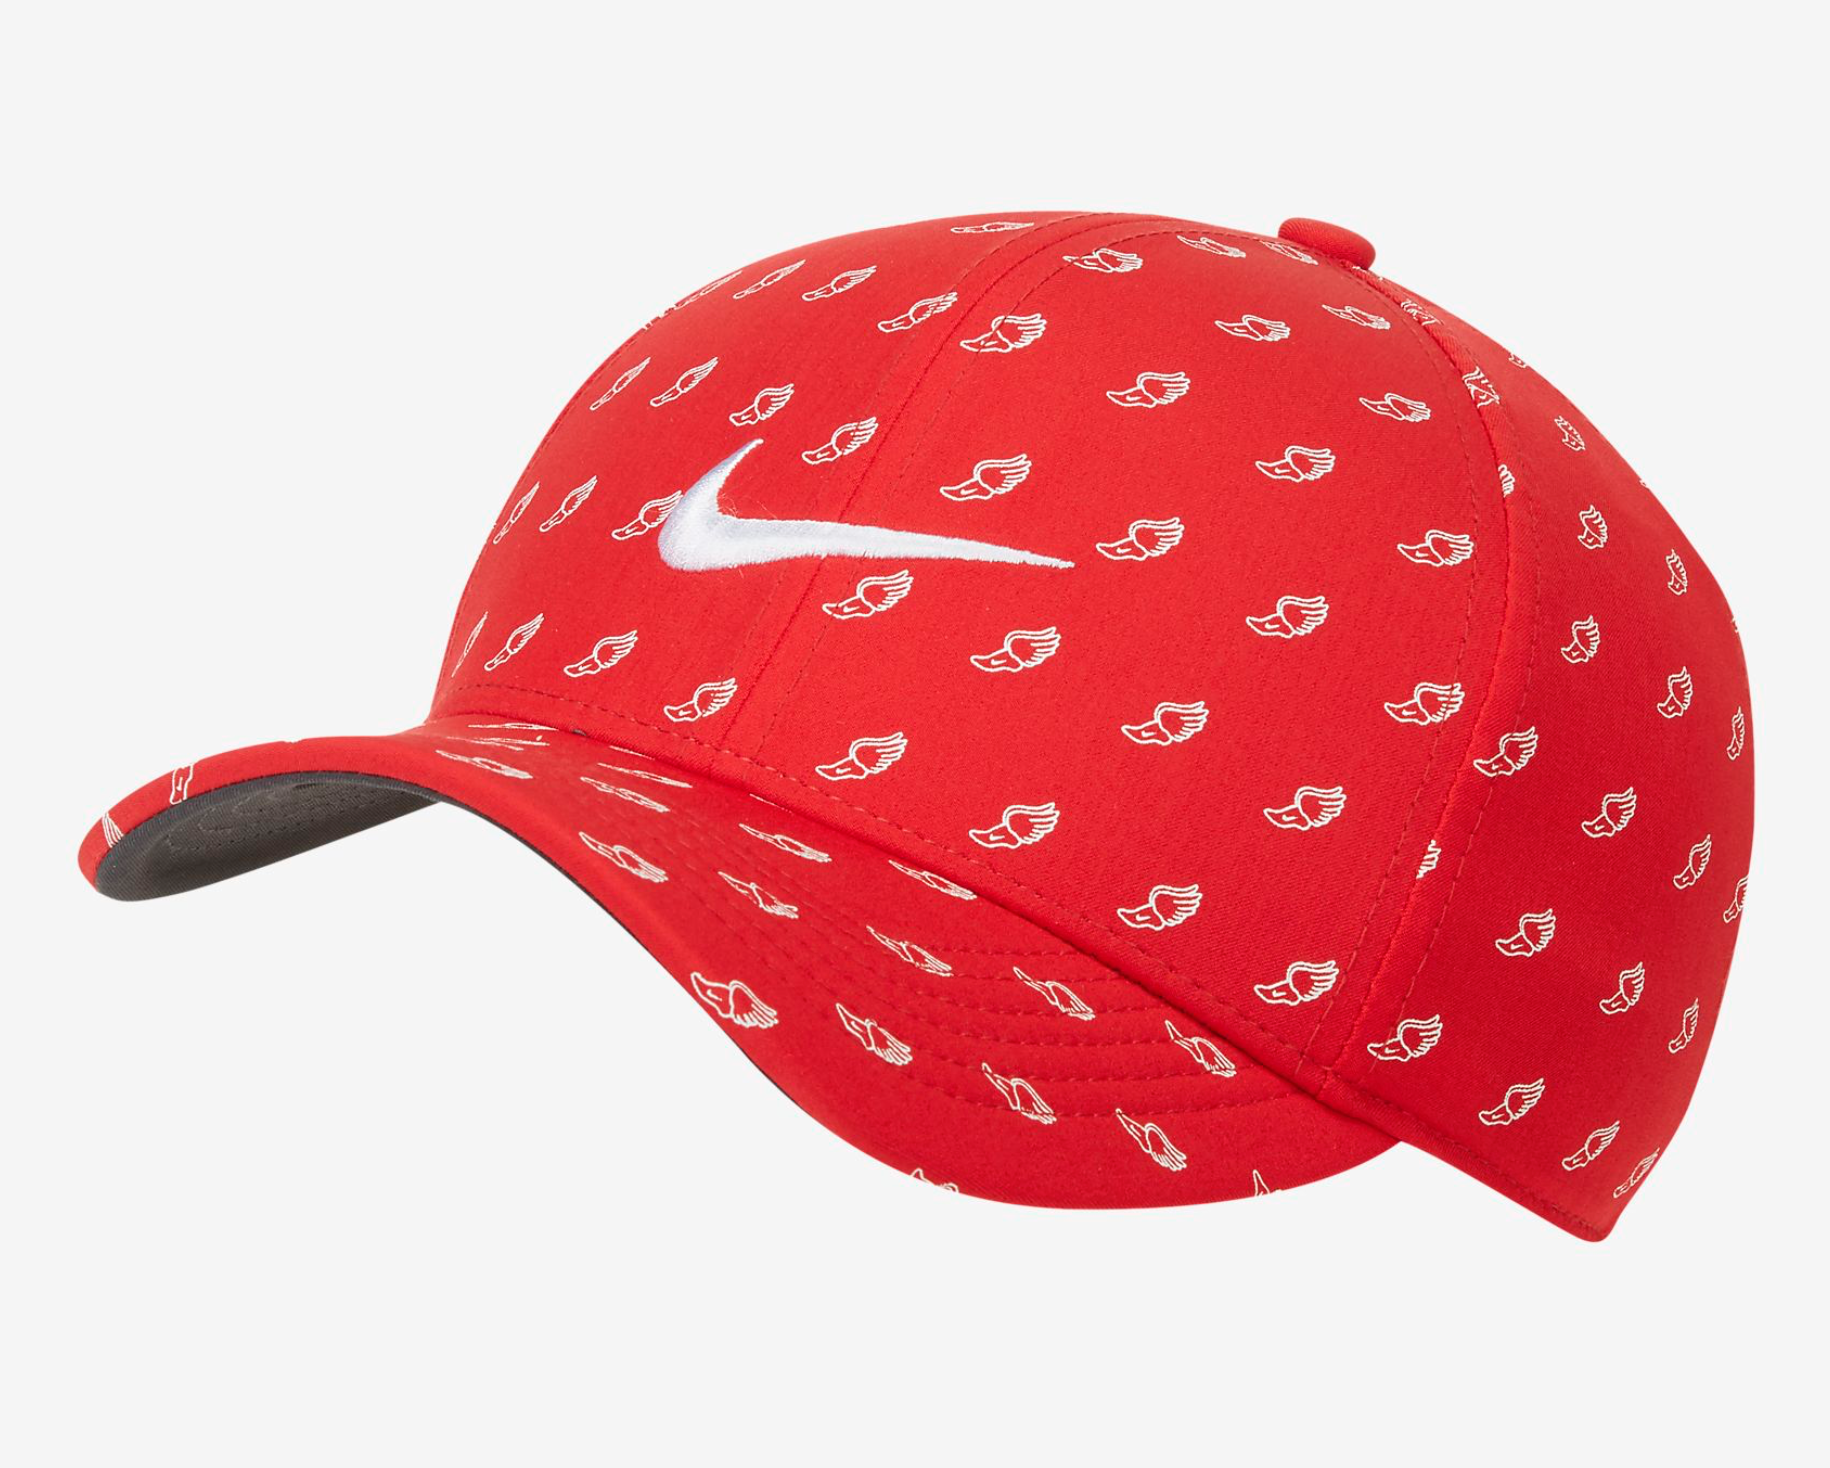 Nike Men's Classic 99 Limited Edition Aerobill Golf Cap Hat